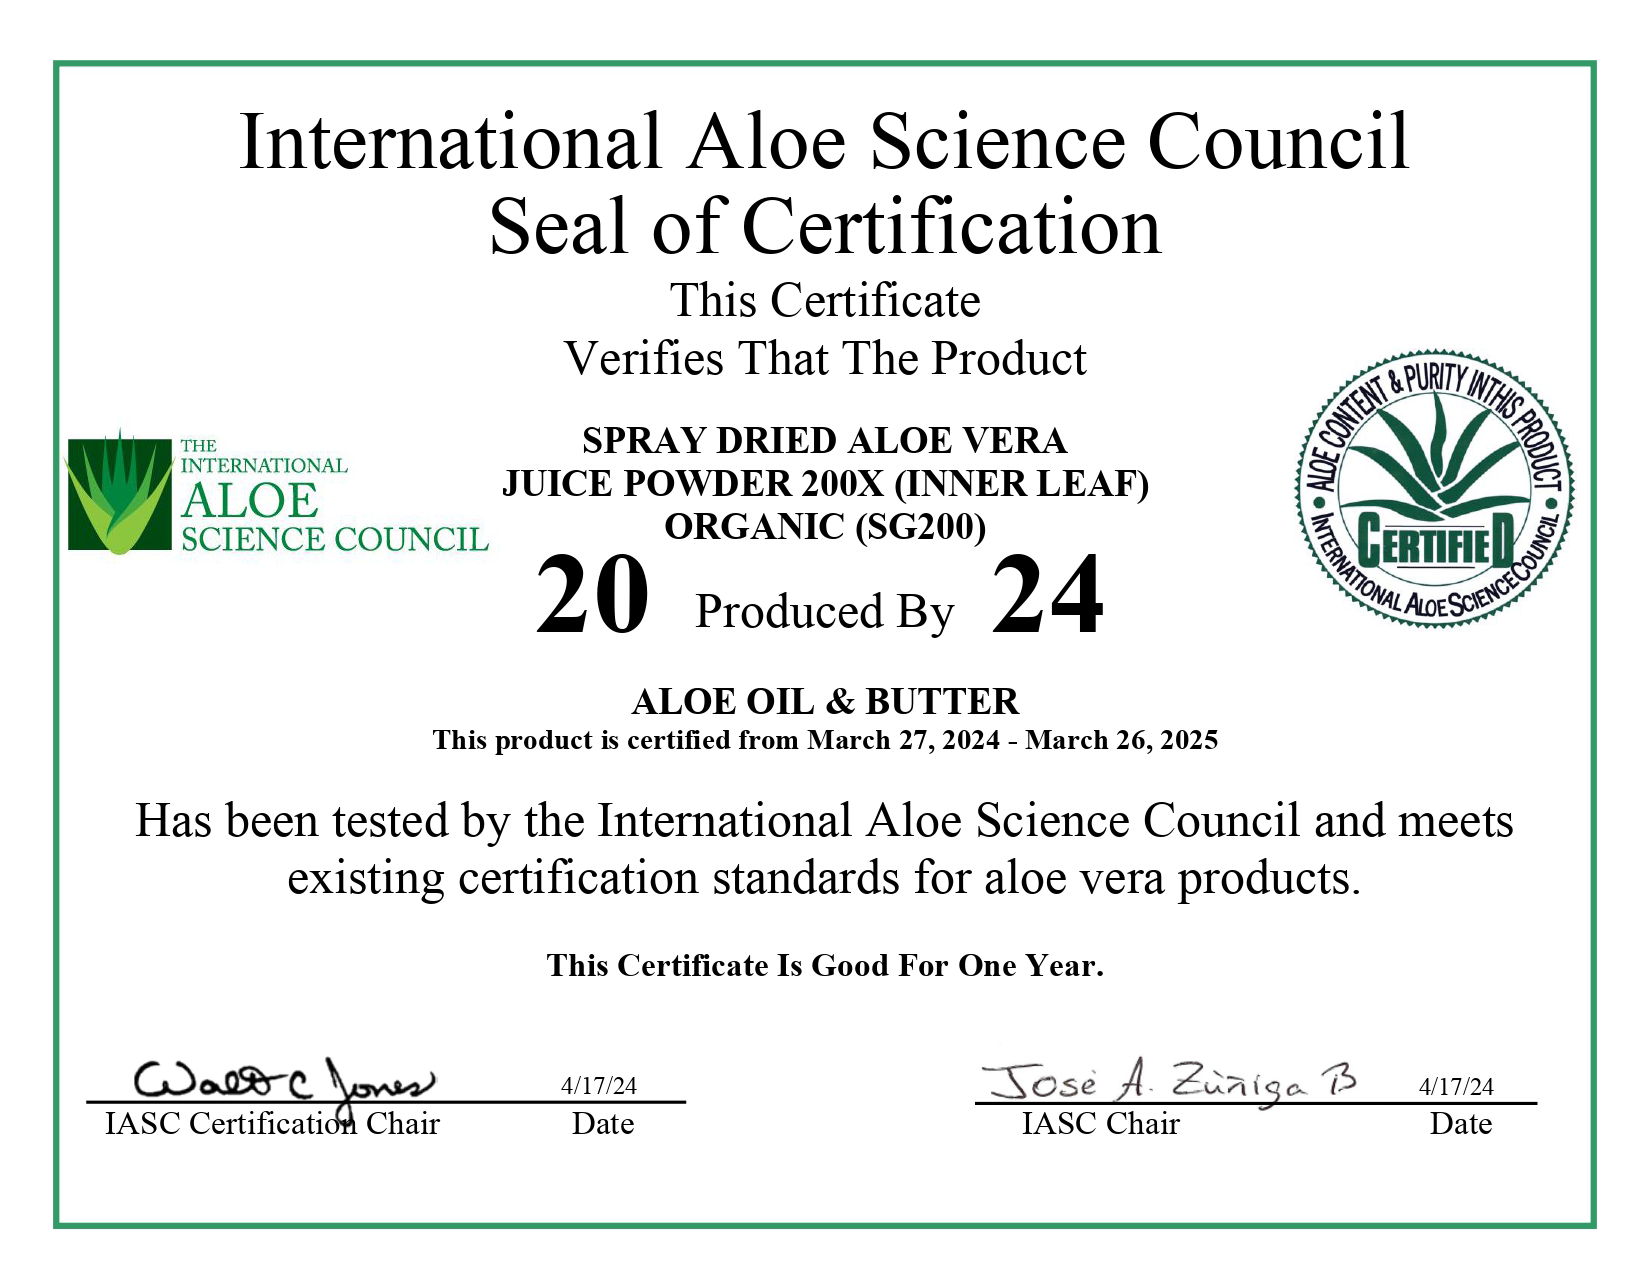 International Aloe Science Council Certification for Spray Dried Aloe Vera Juice Powder 200X